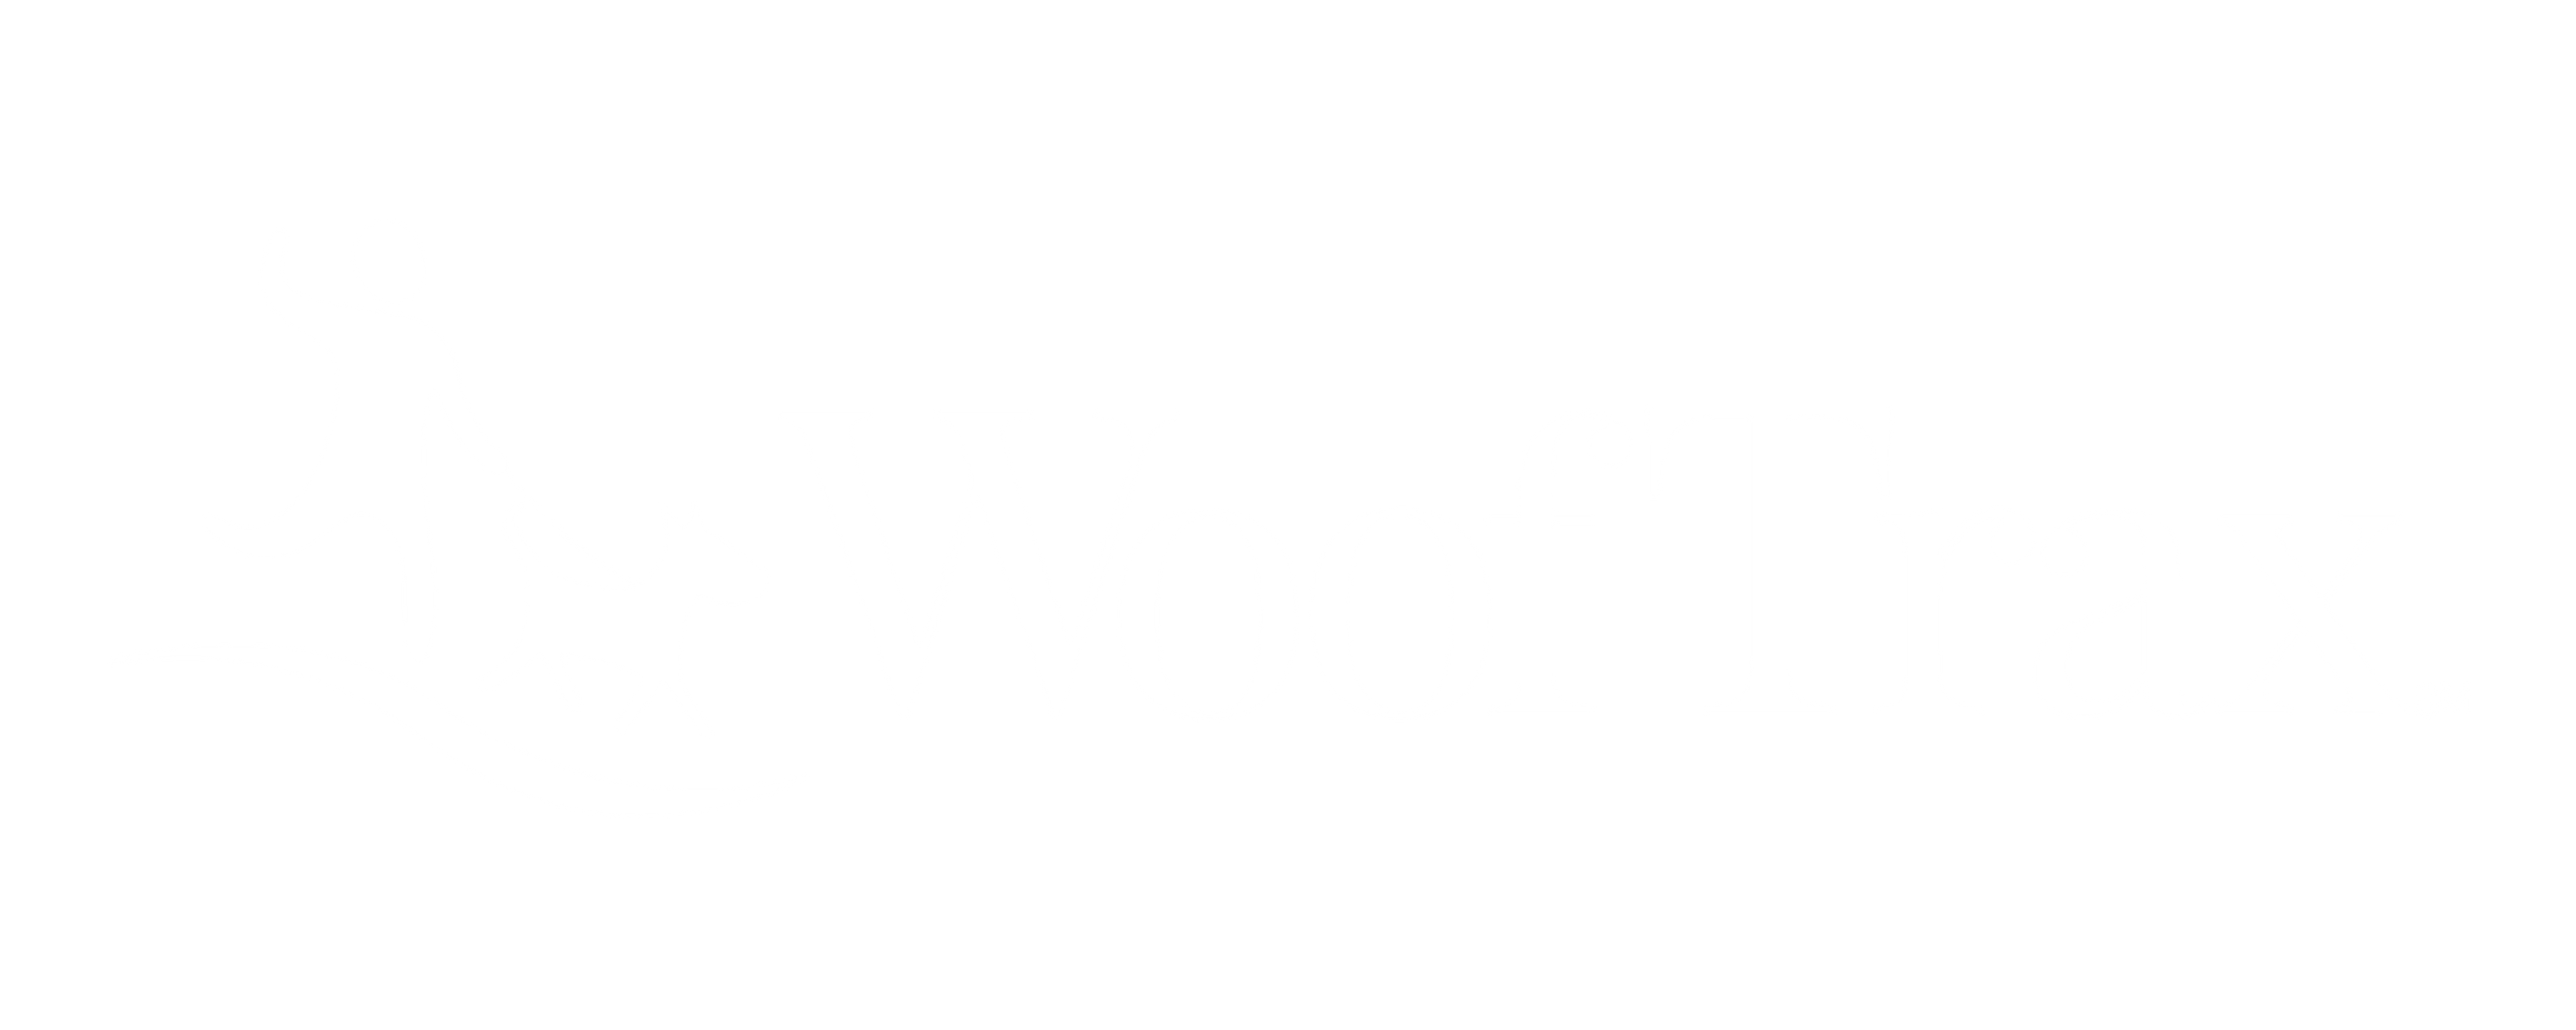 WoofTrax